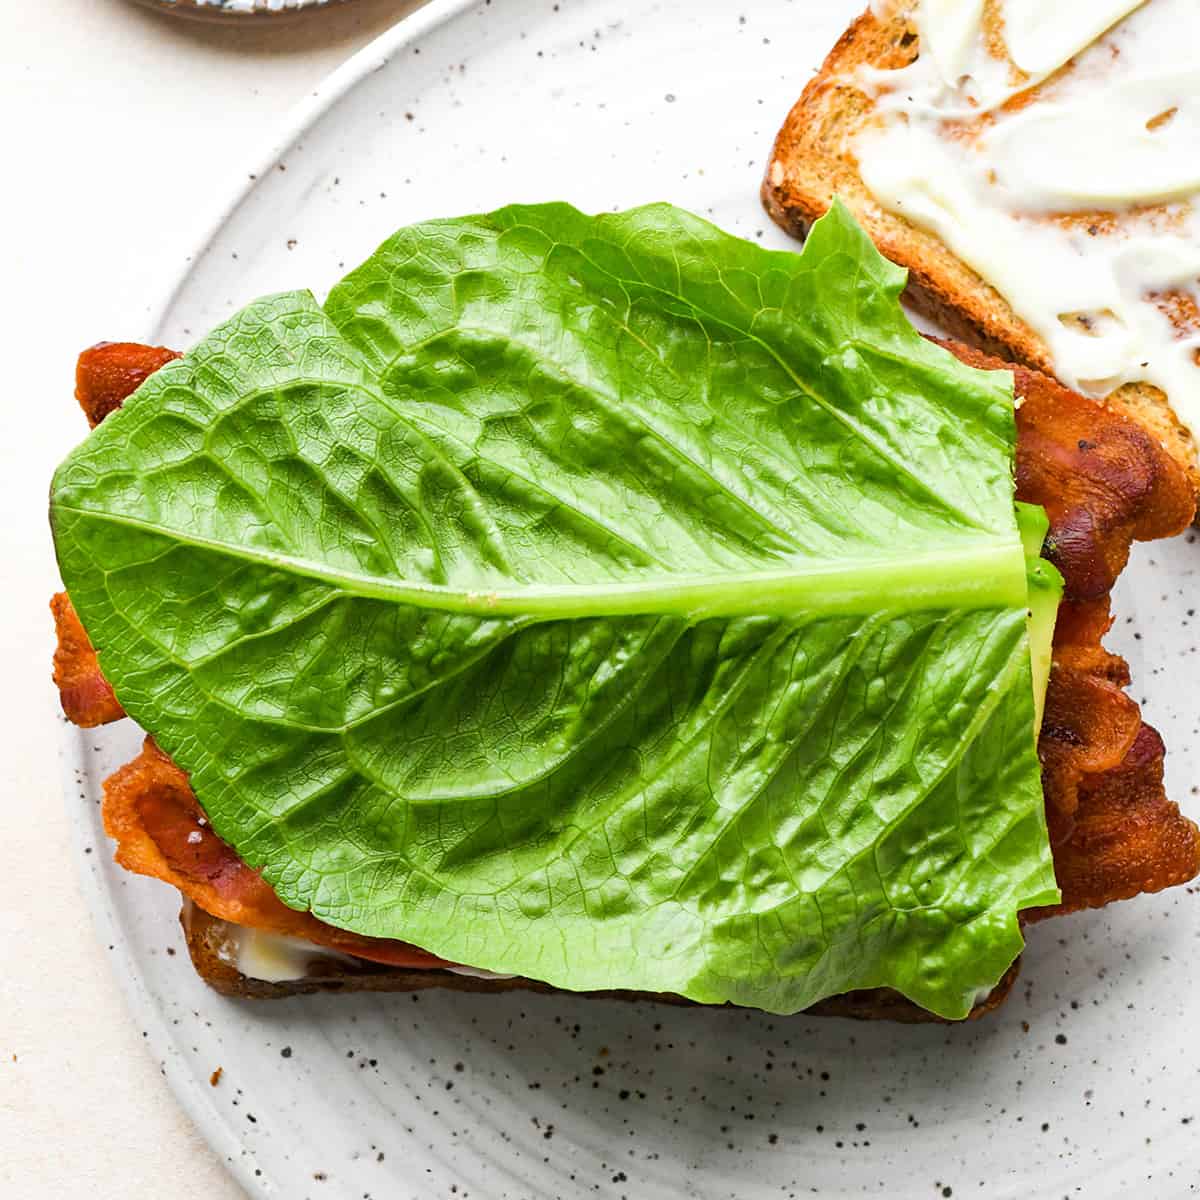 assembling a BLT sandwich - adding lettuce